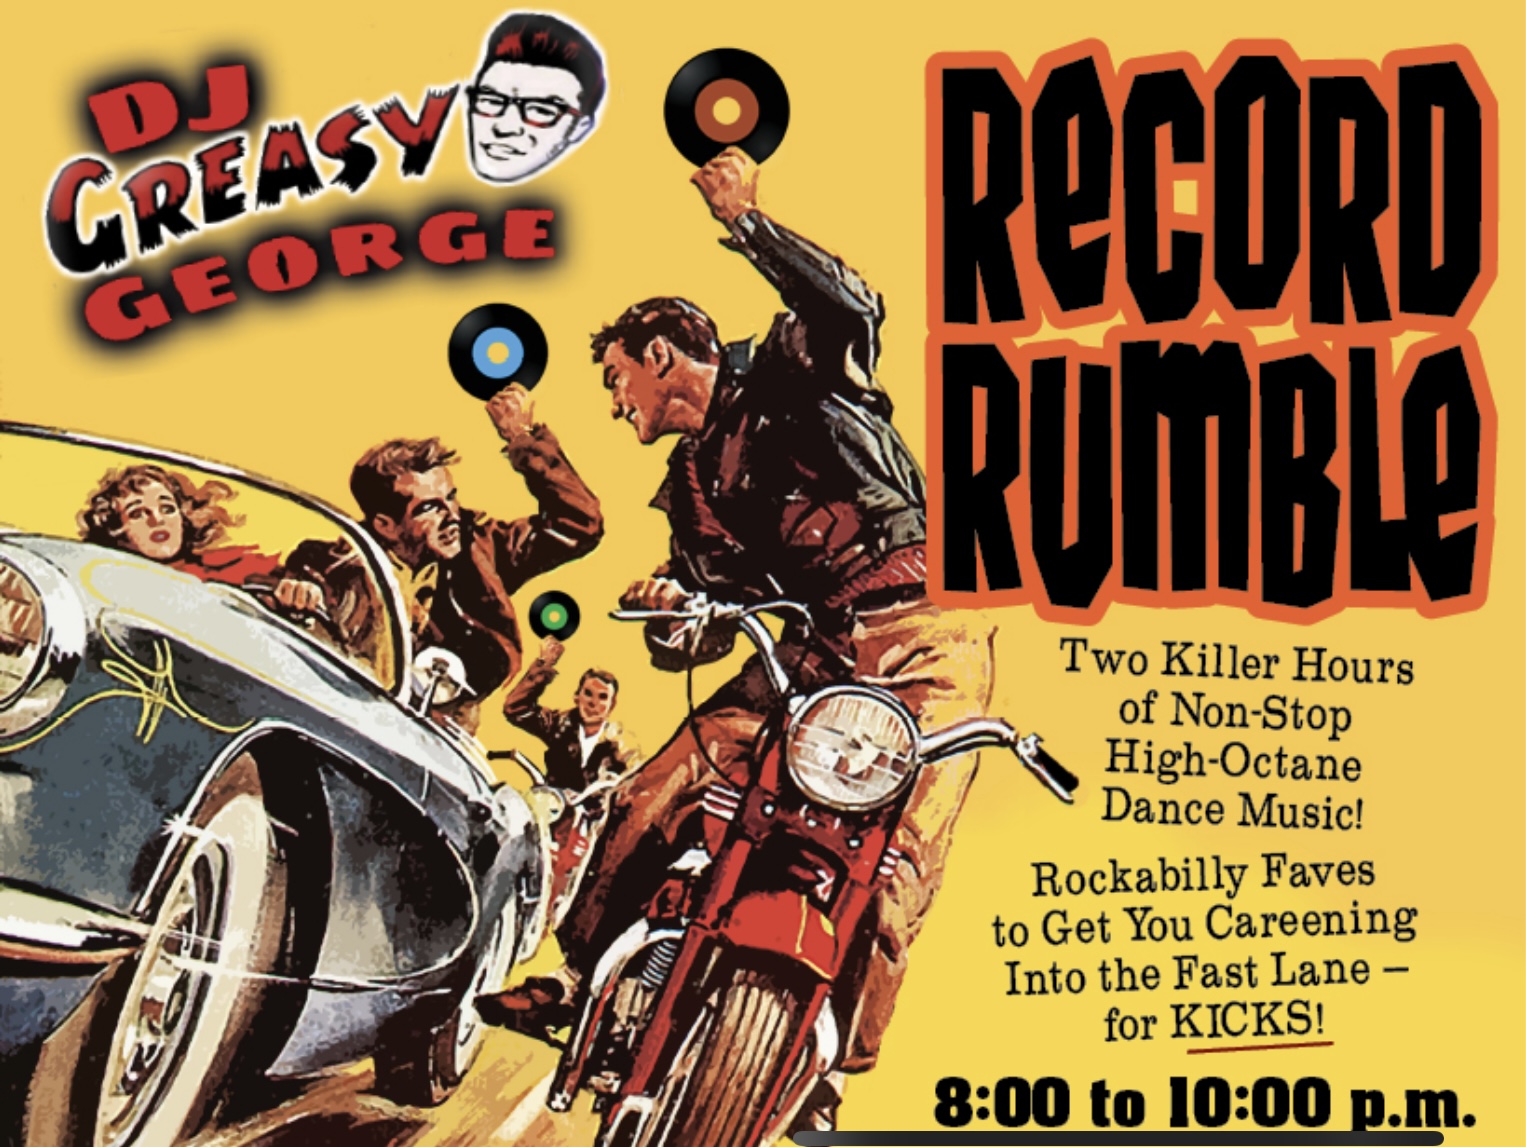 DJ Greasy George Record Rumble